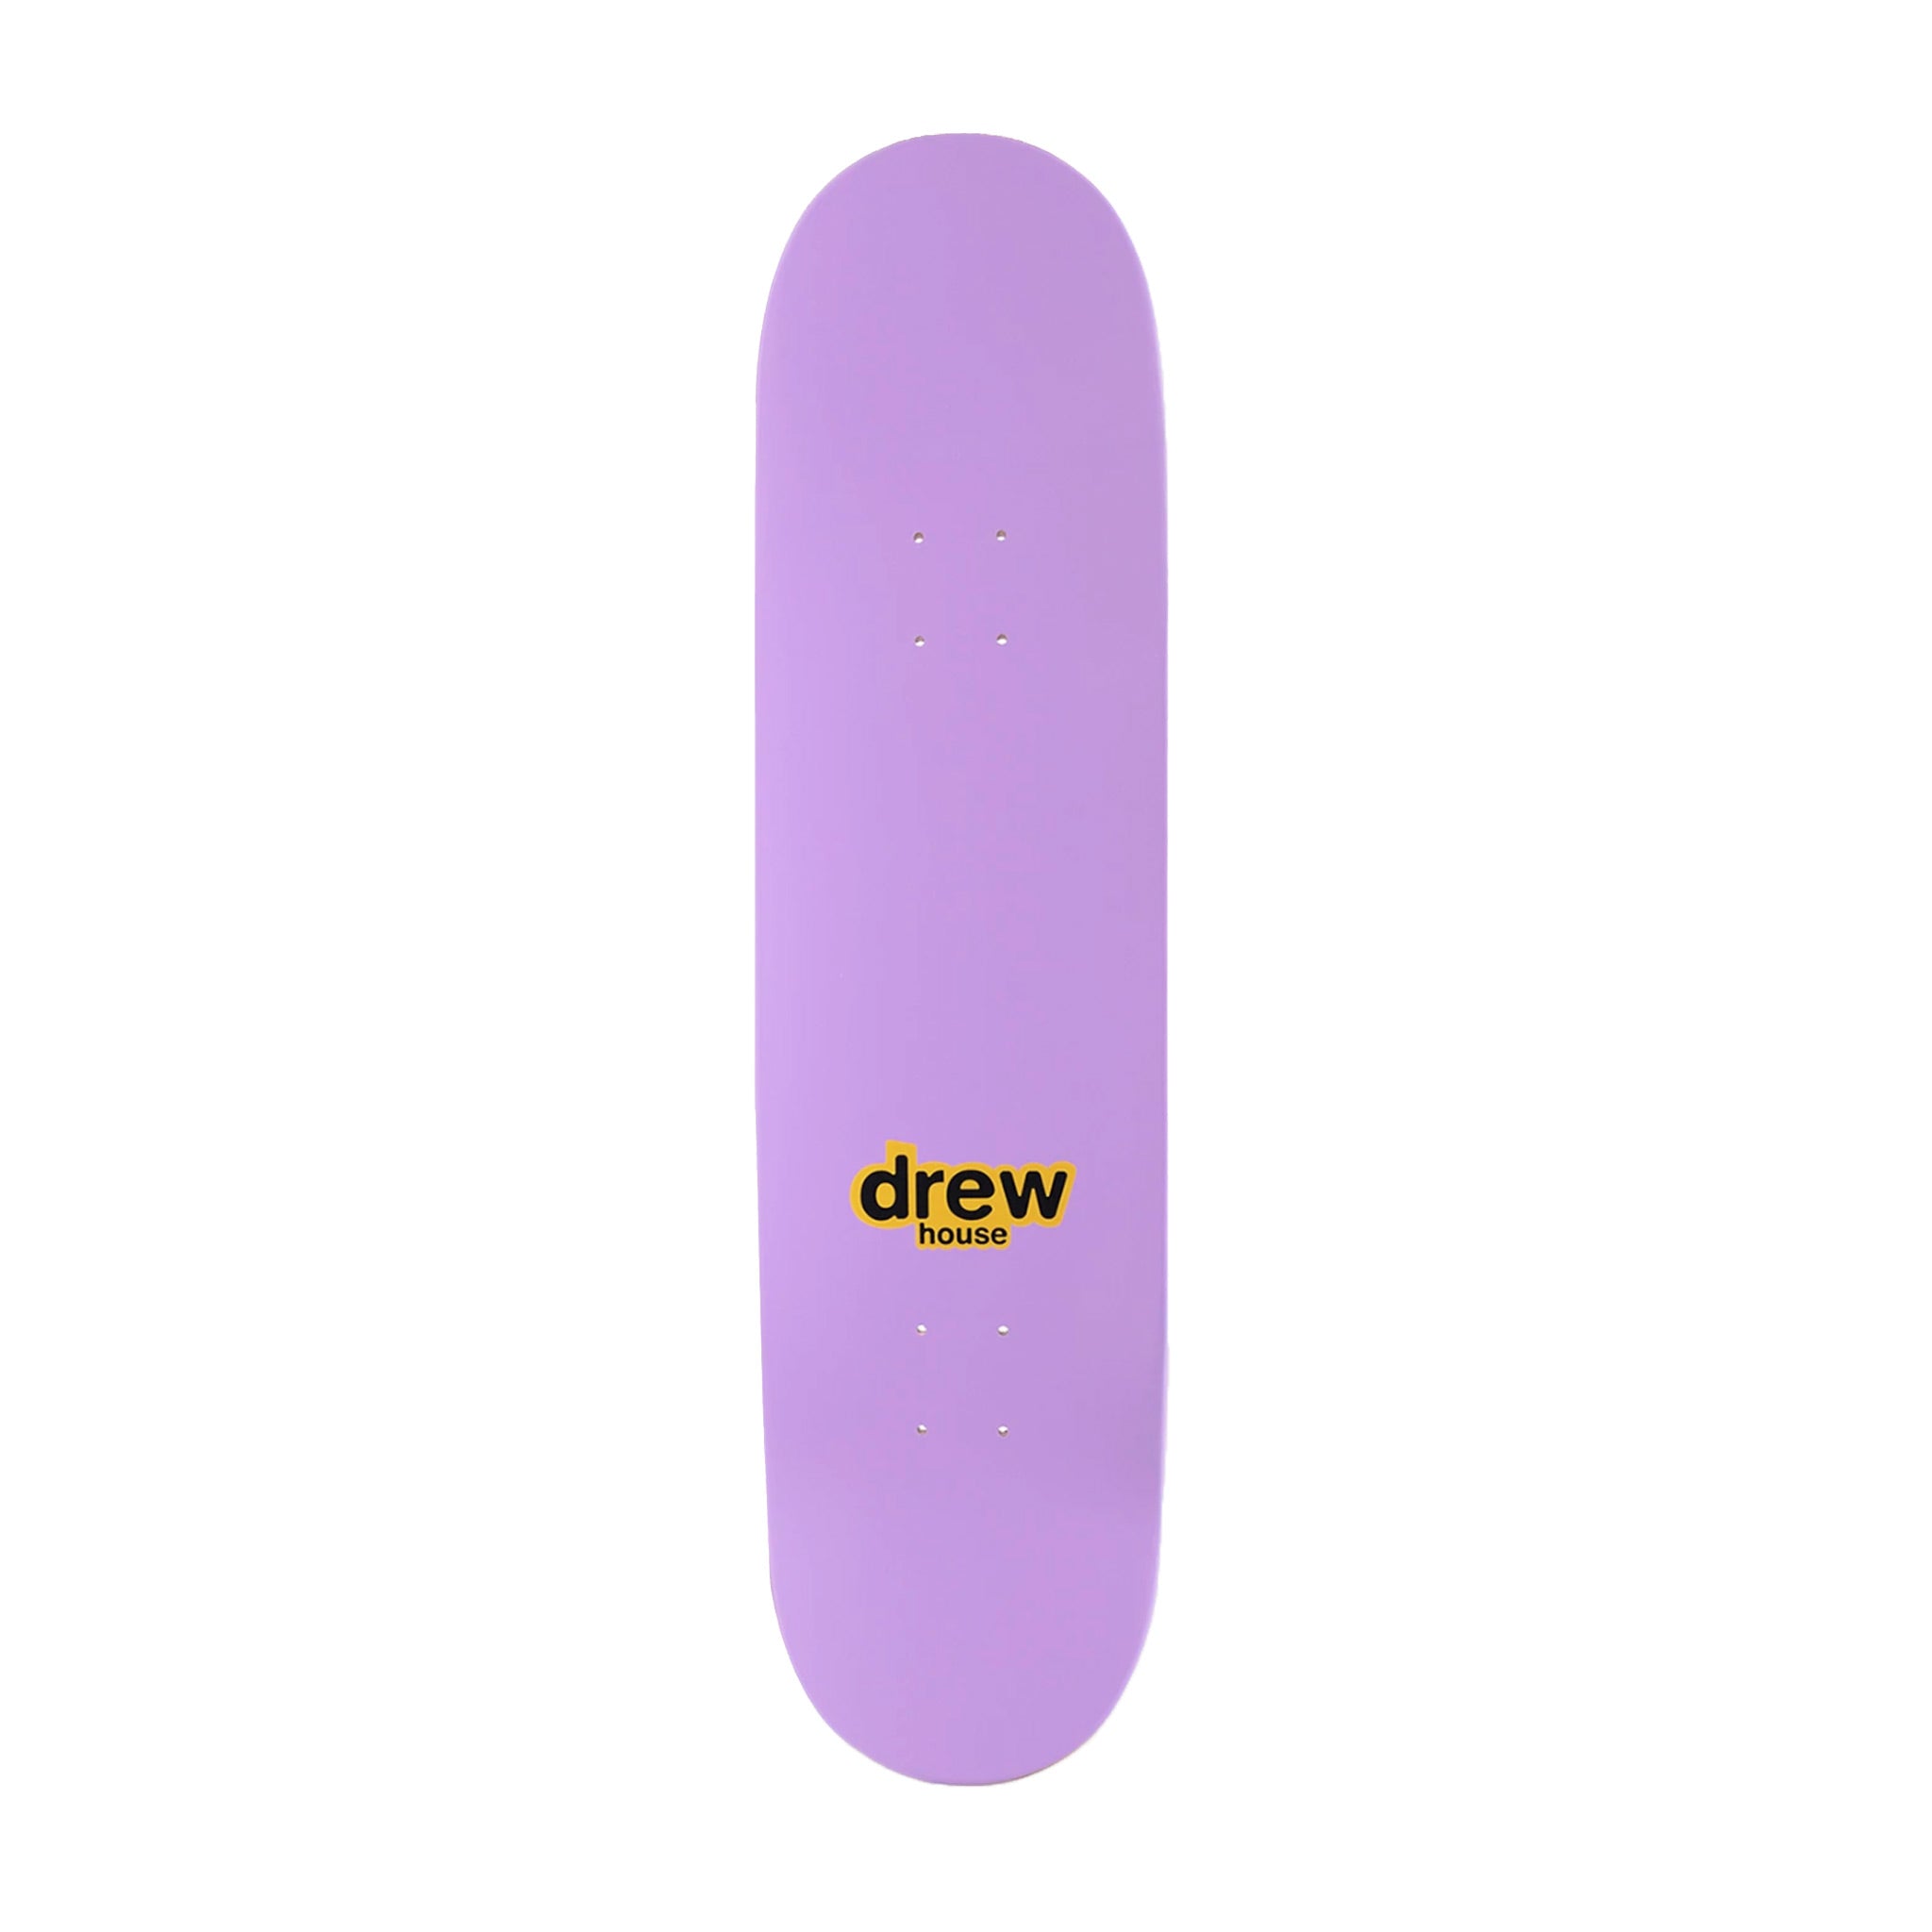 Drew House Mascot Skate Deck - Lavender | Points Streetwear Store ...